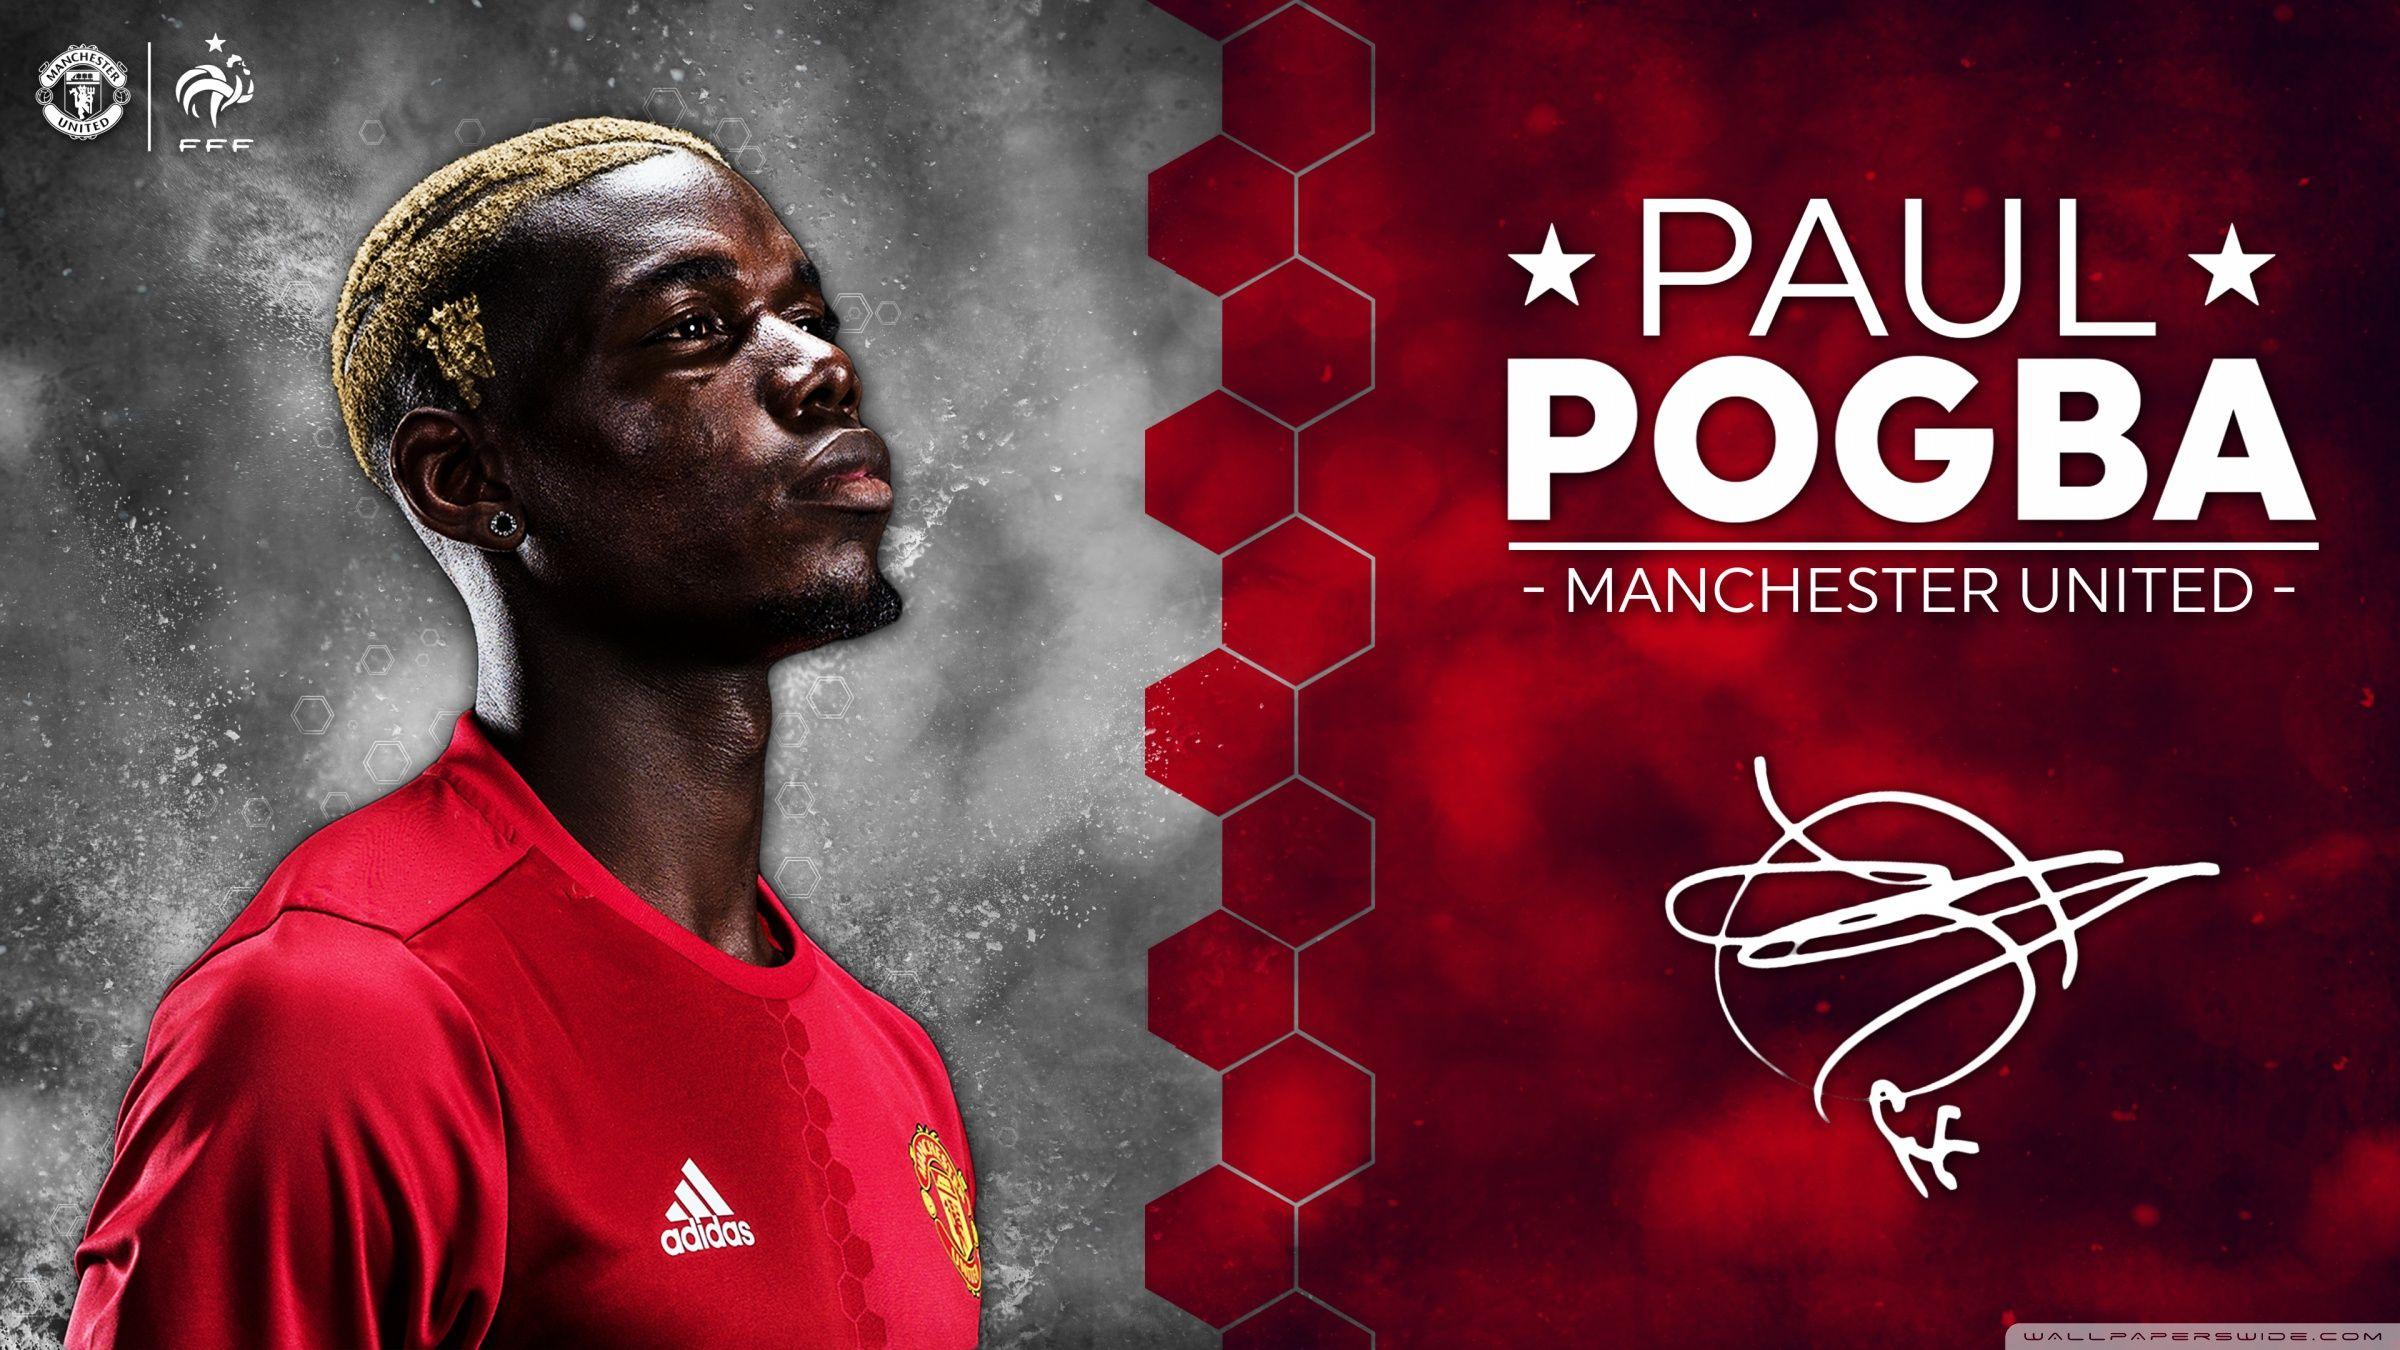 Paul Pogba Manchester United 2016 17 HD desktop wallpaper, High